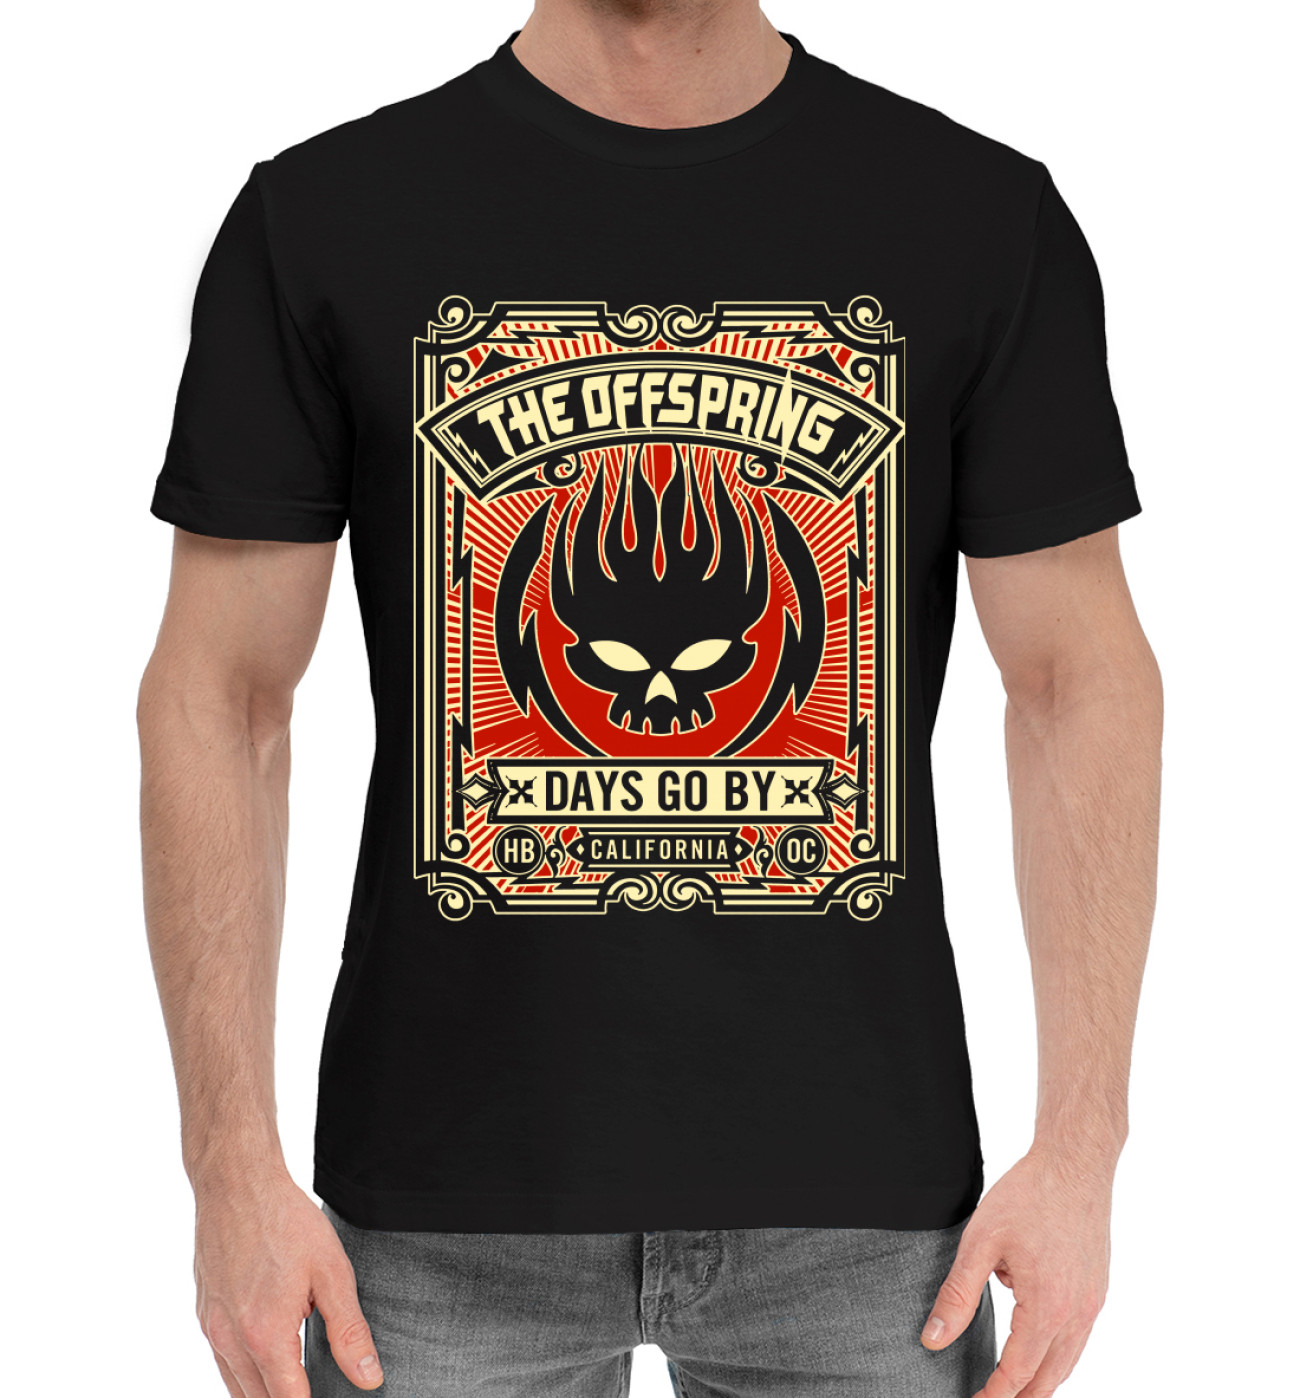 Мужская Хлопковая футболка Offspring, артикул: OFS-537873-hfu-2